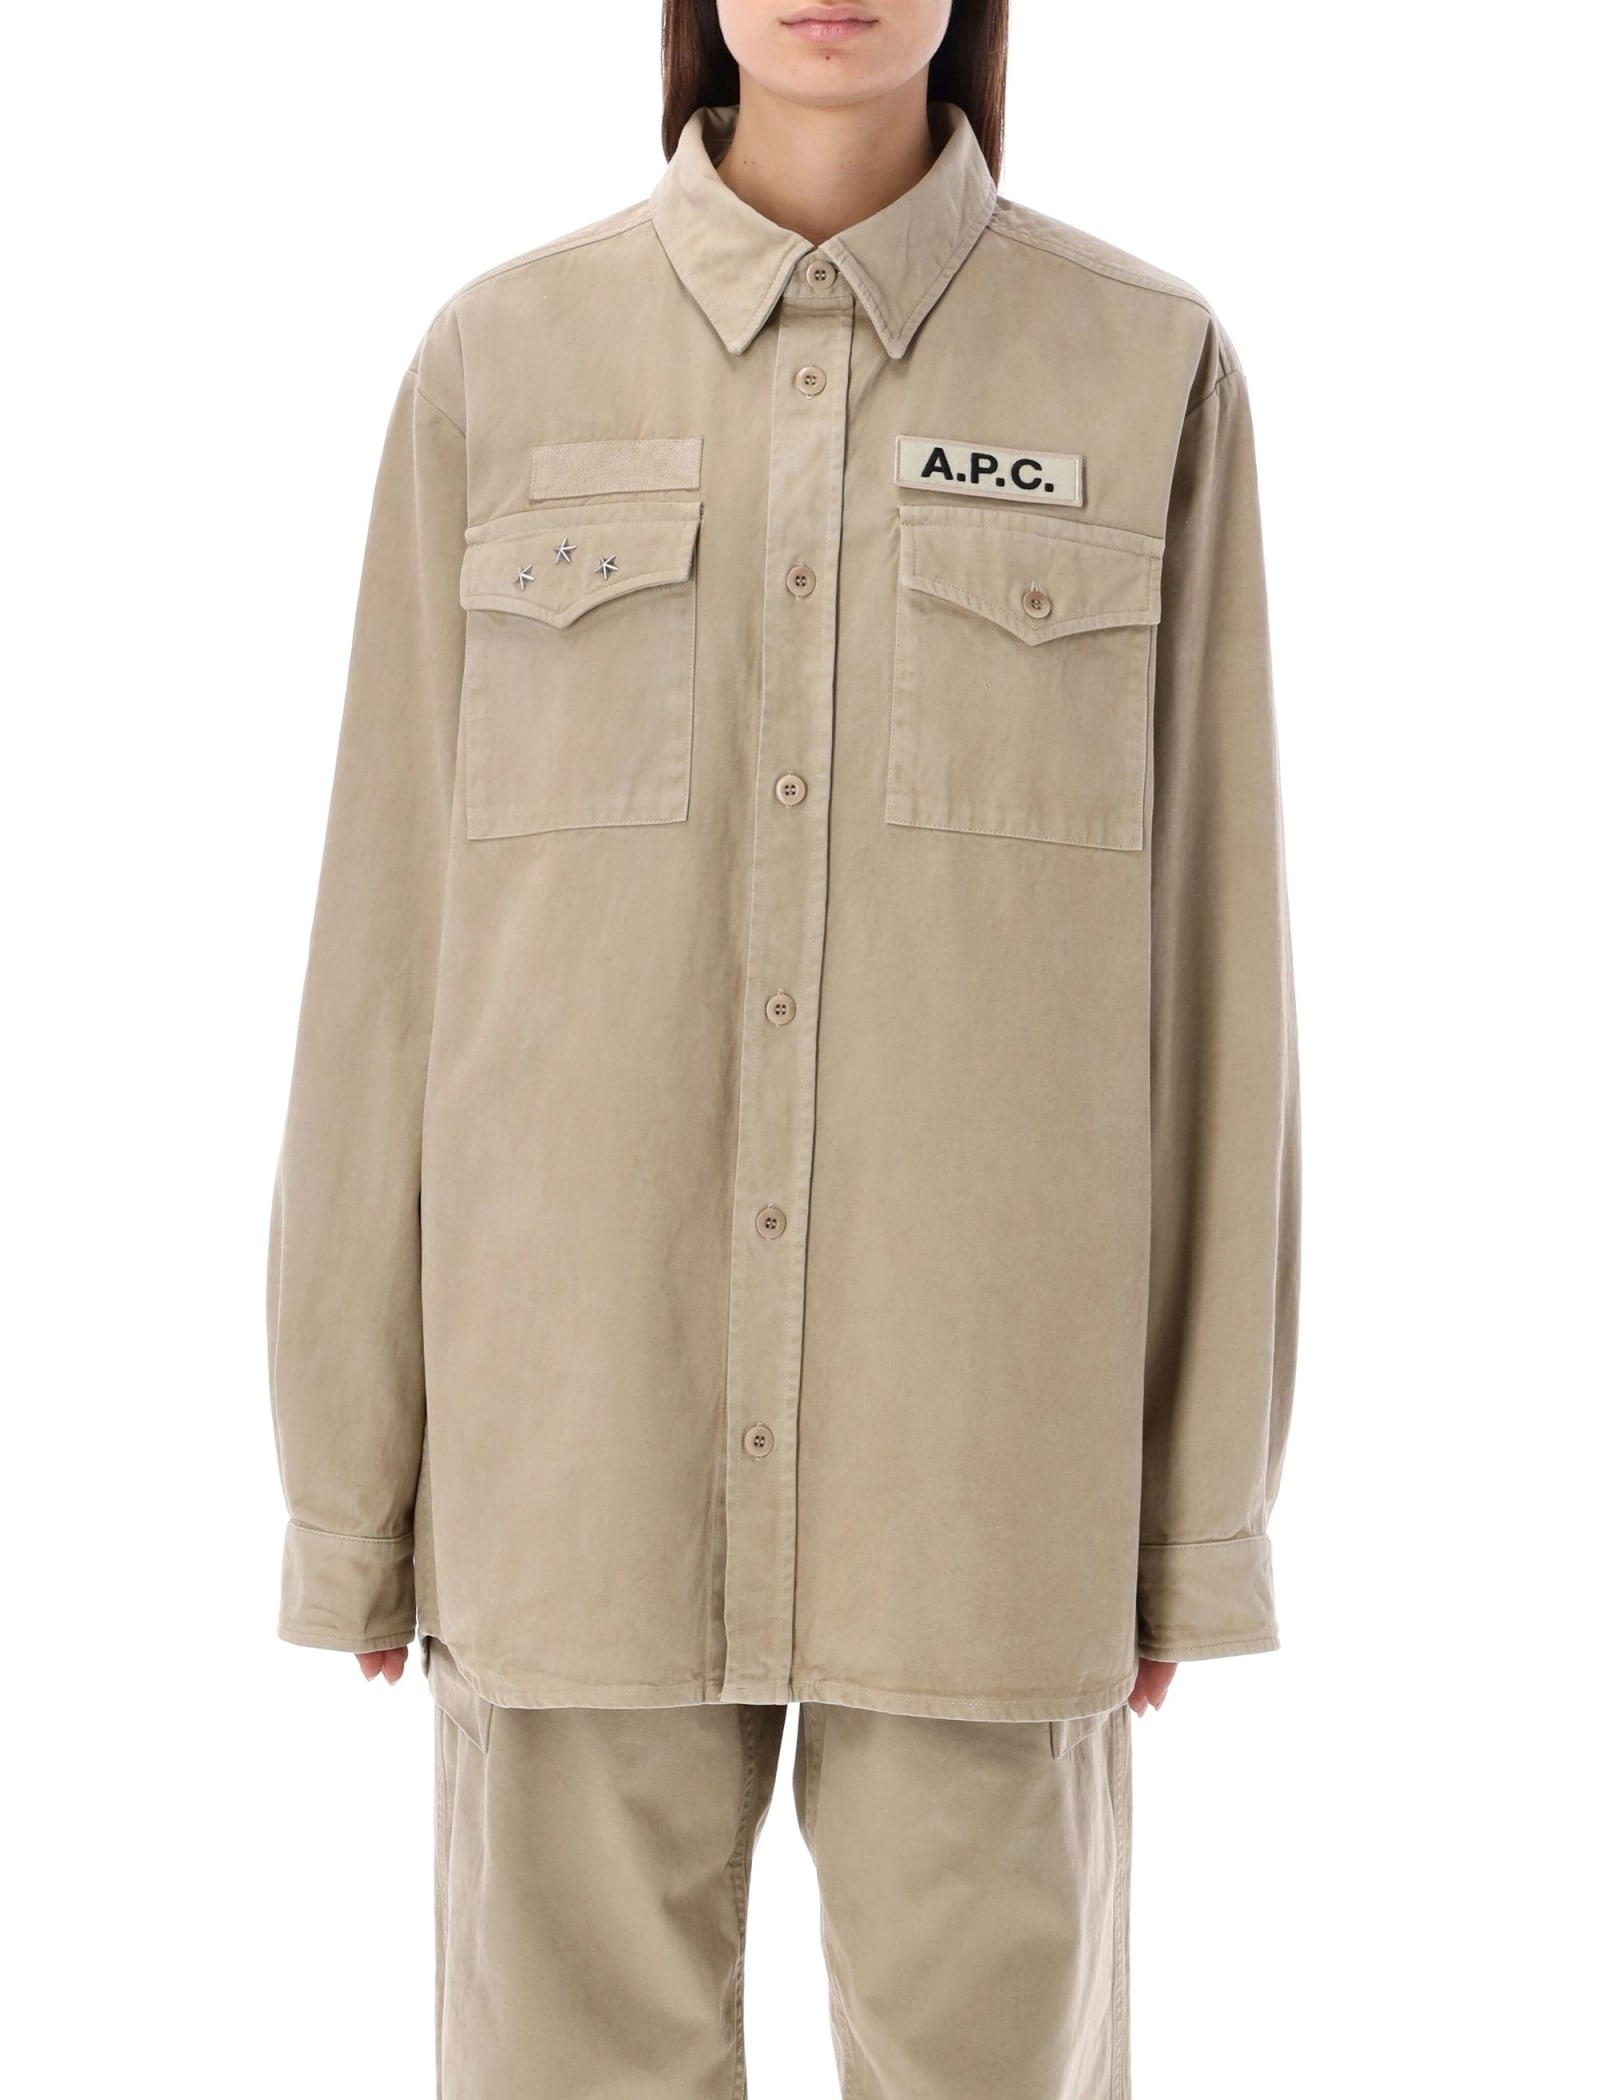 A.P.C. 35 Years Military Shirt